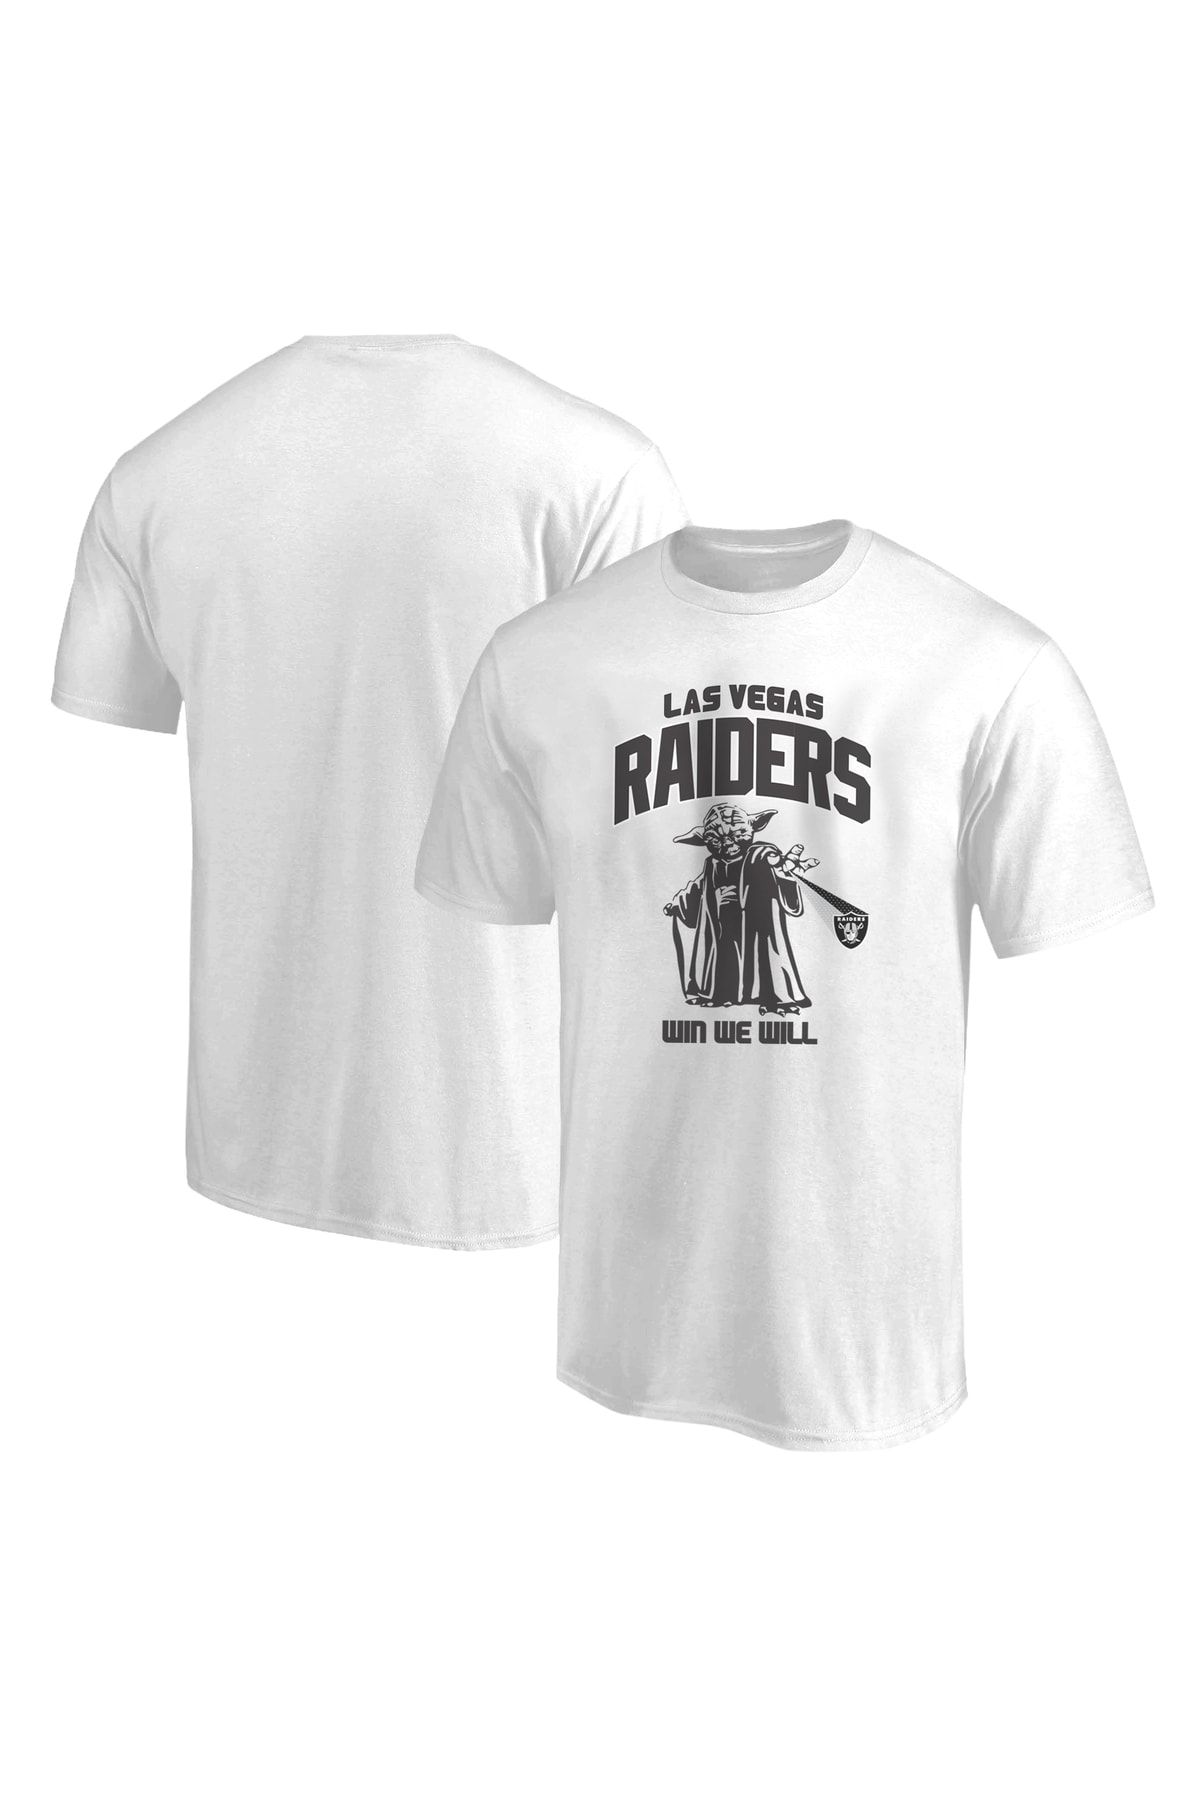 Usateamfans Oakland Raiders Tshirt